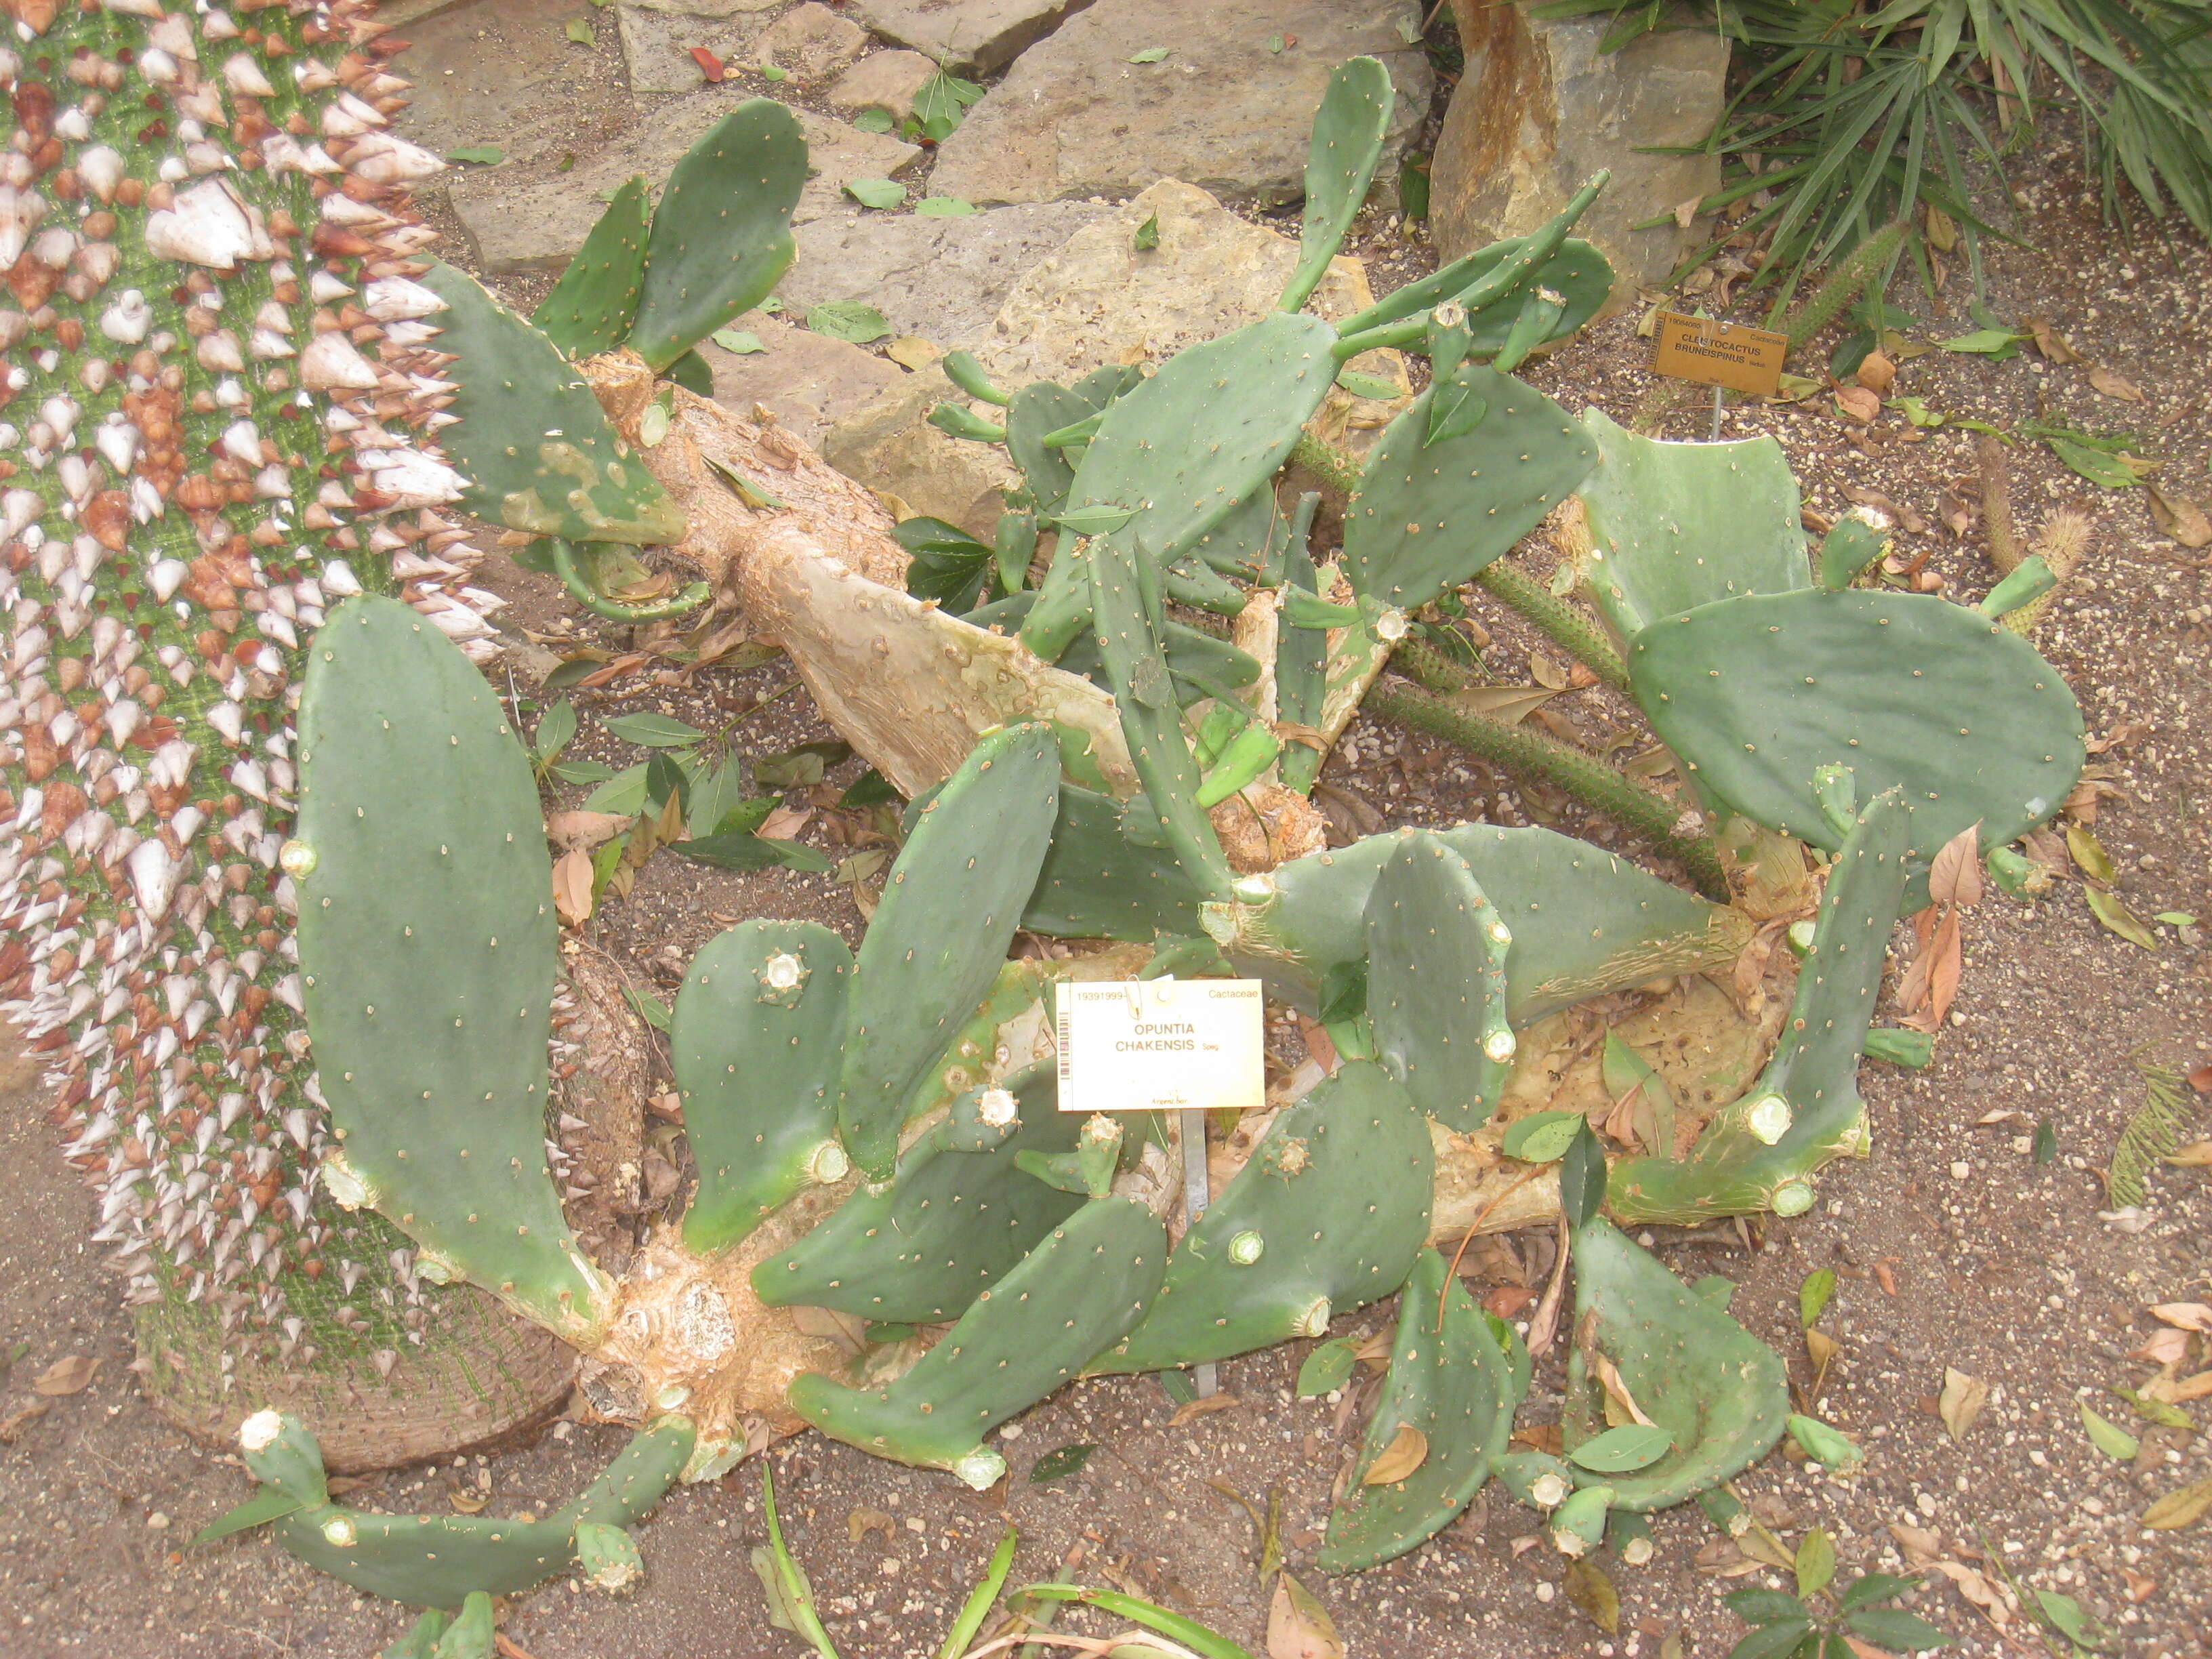 Image of Opuntia elata Salm-Dyck